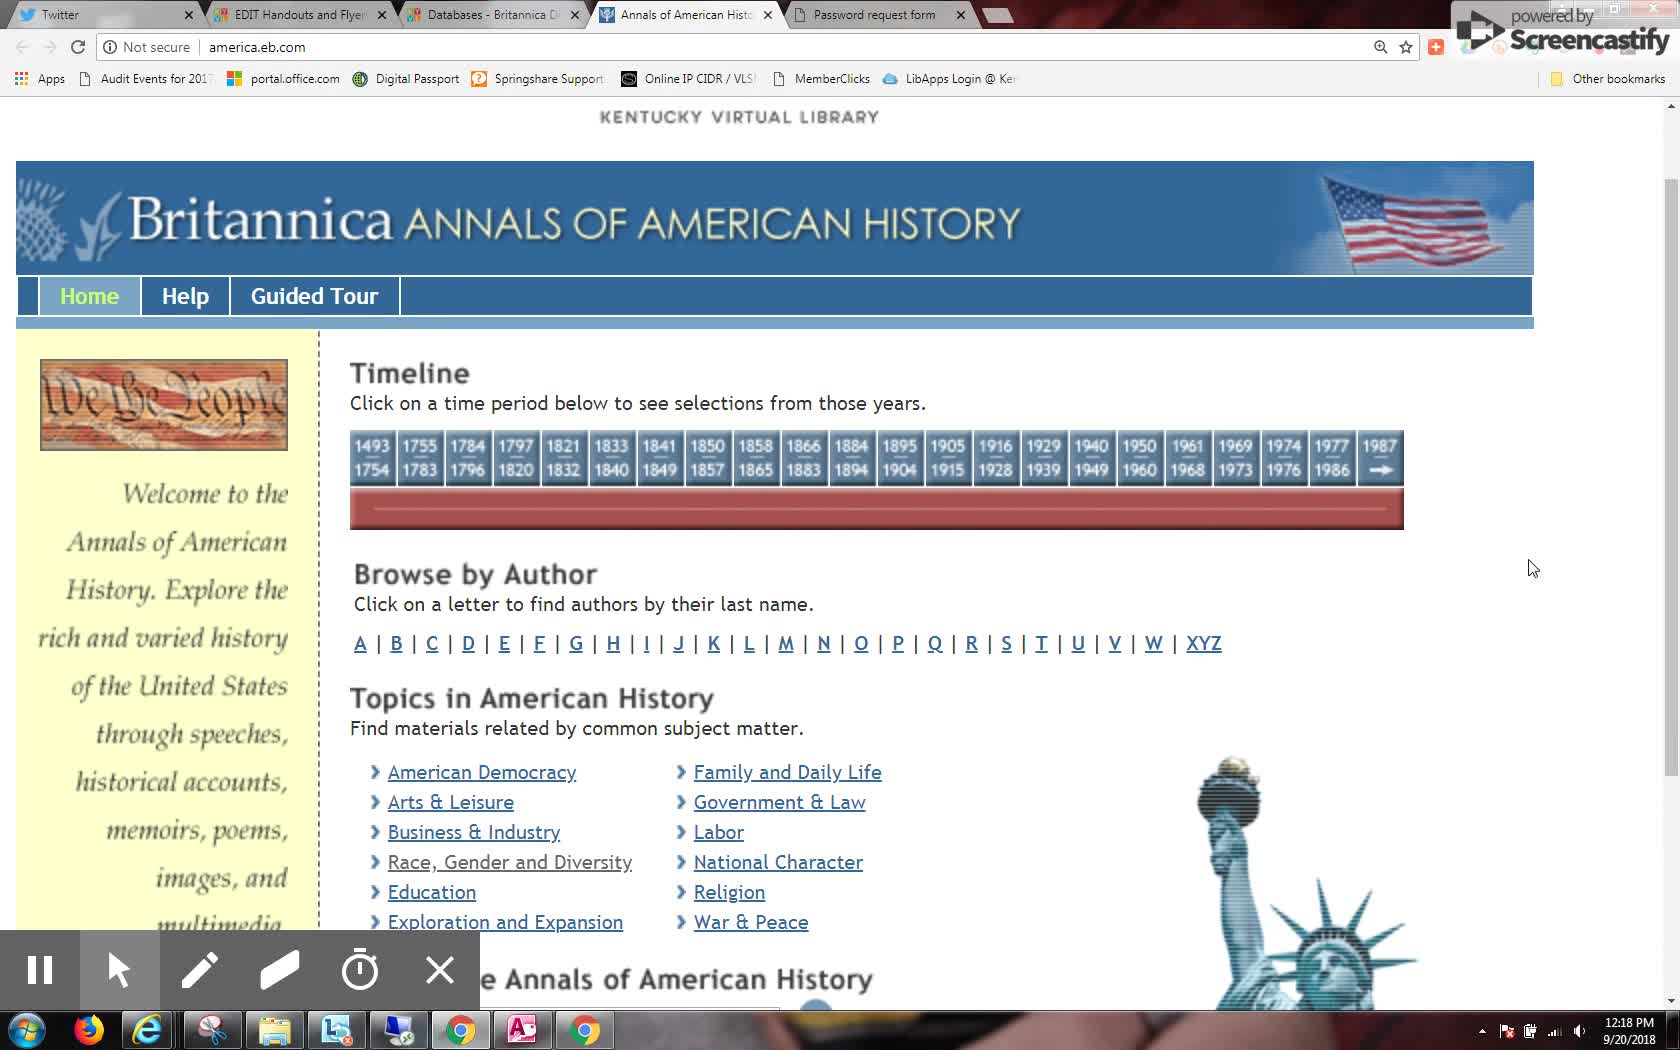 Annal of American History (Britannica) training video